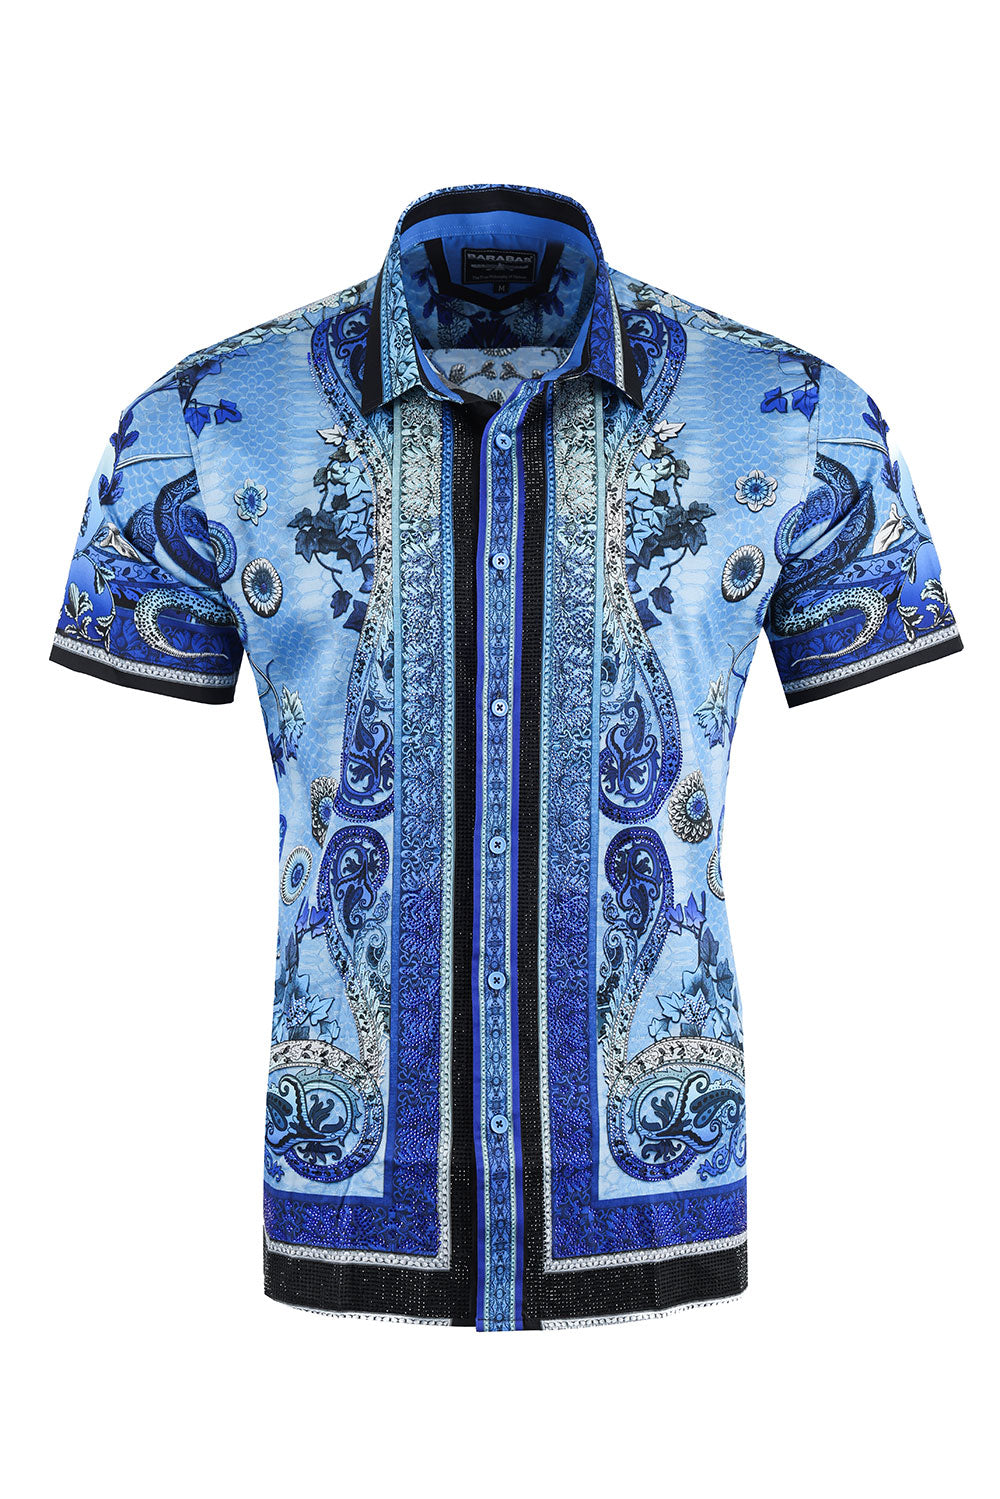 BARABAS Men's Paisley Floral Rhinestoned Short Sleeve Shirt 3SR408 Blue